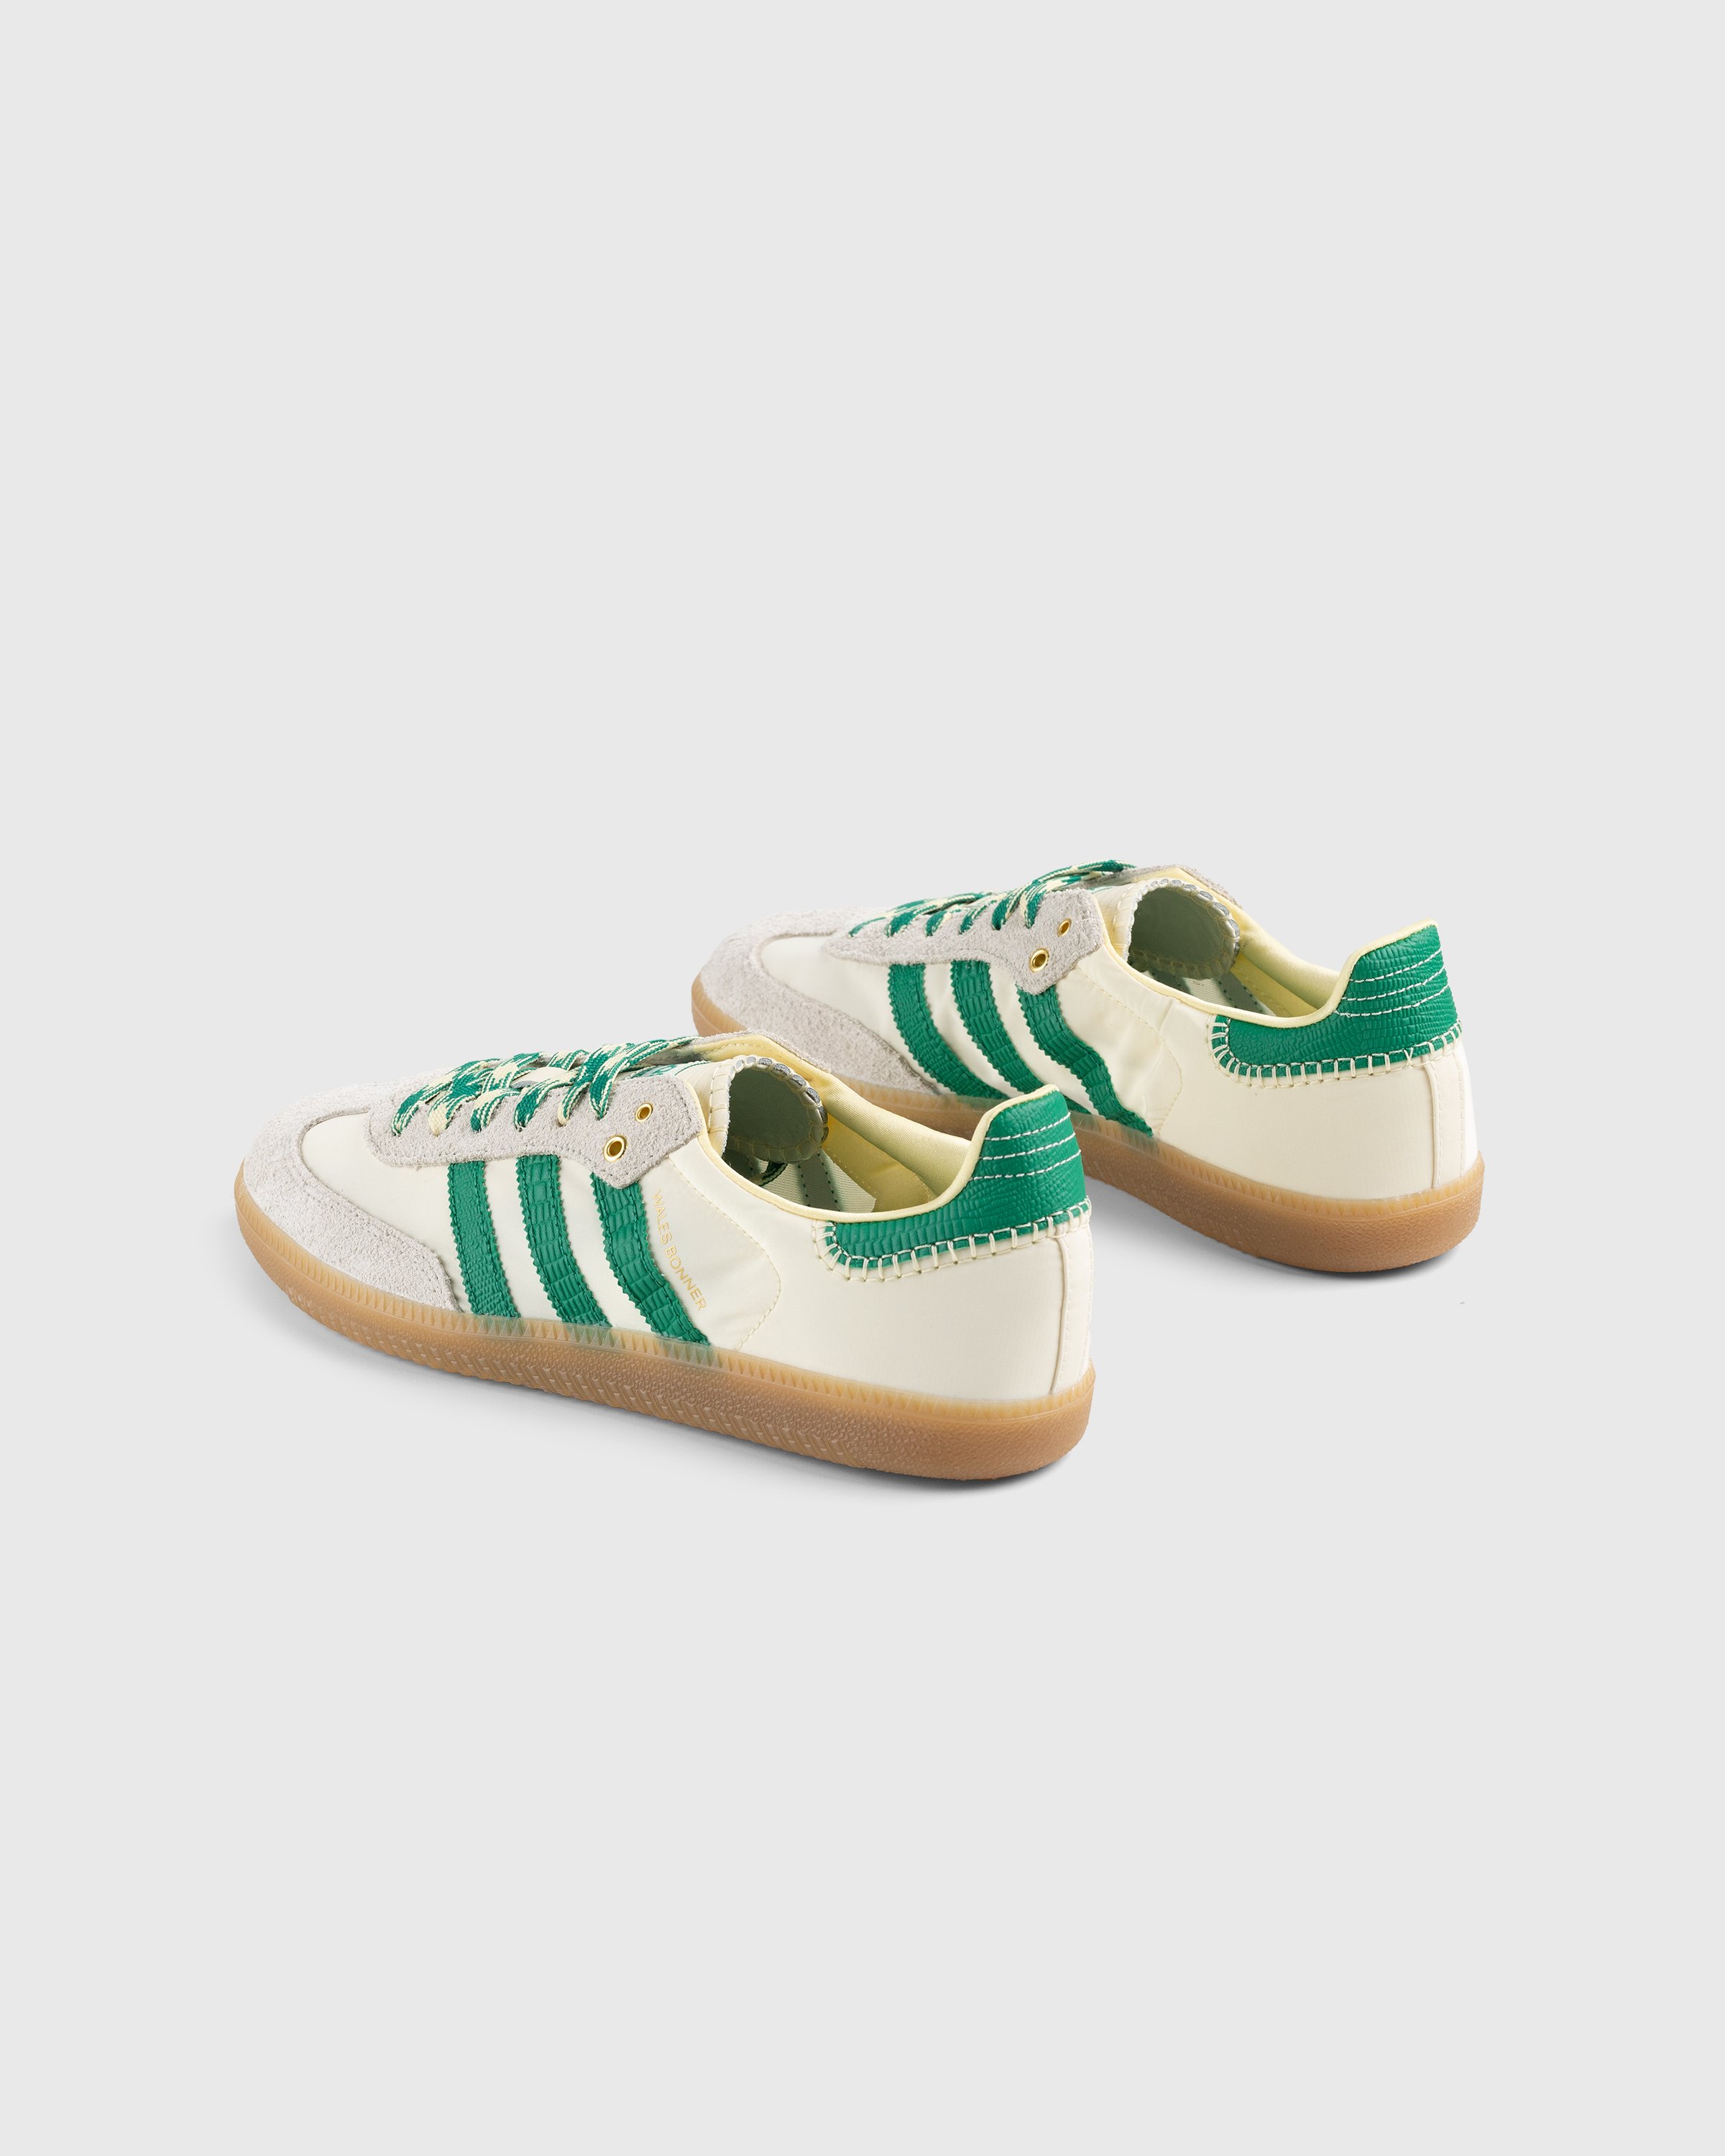 Adidas x Wales Bonner - WB Samba Cream White/Bold Green/Easy Yellow - Footwear - Beige - Image 4